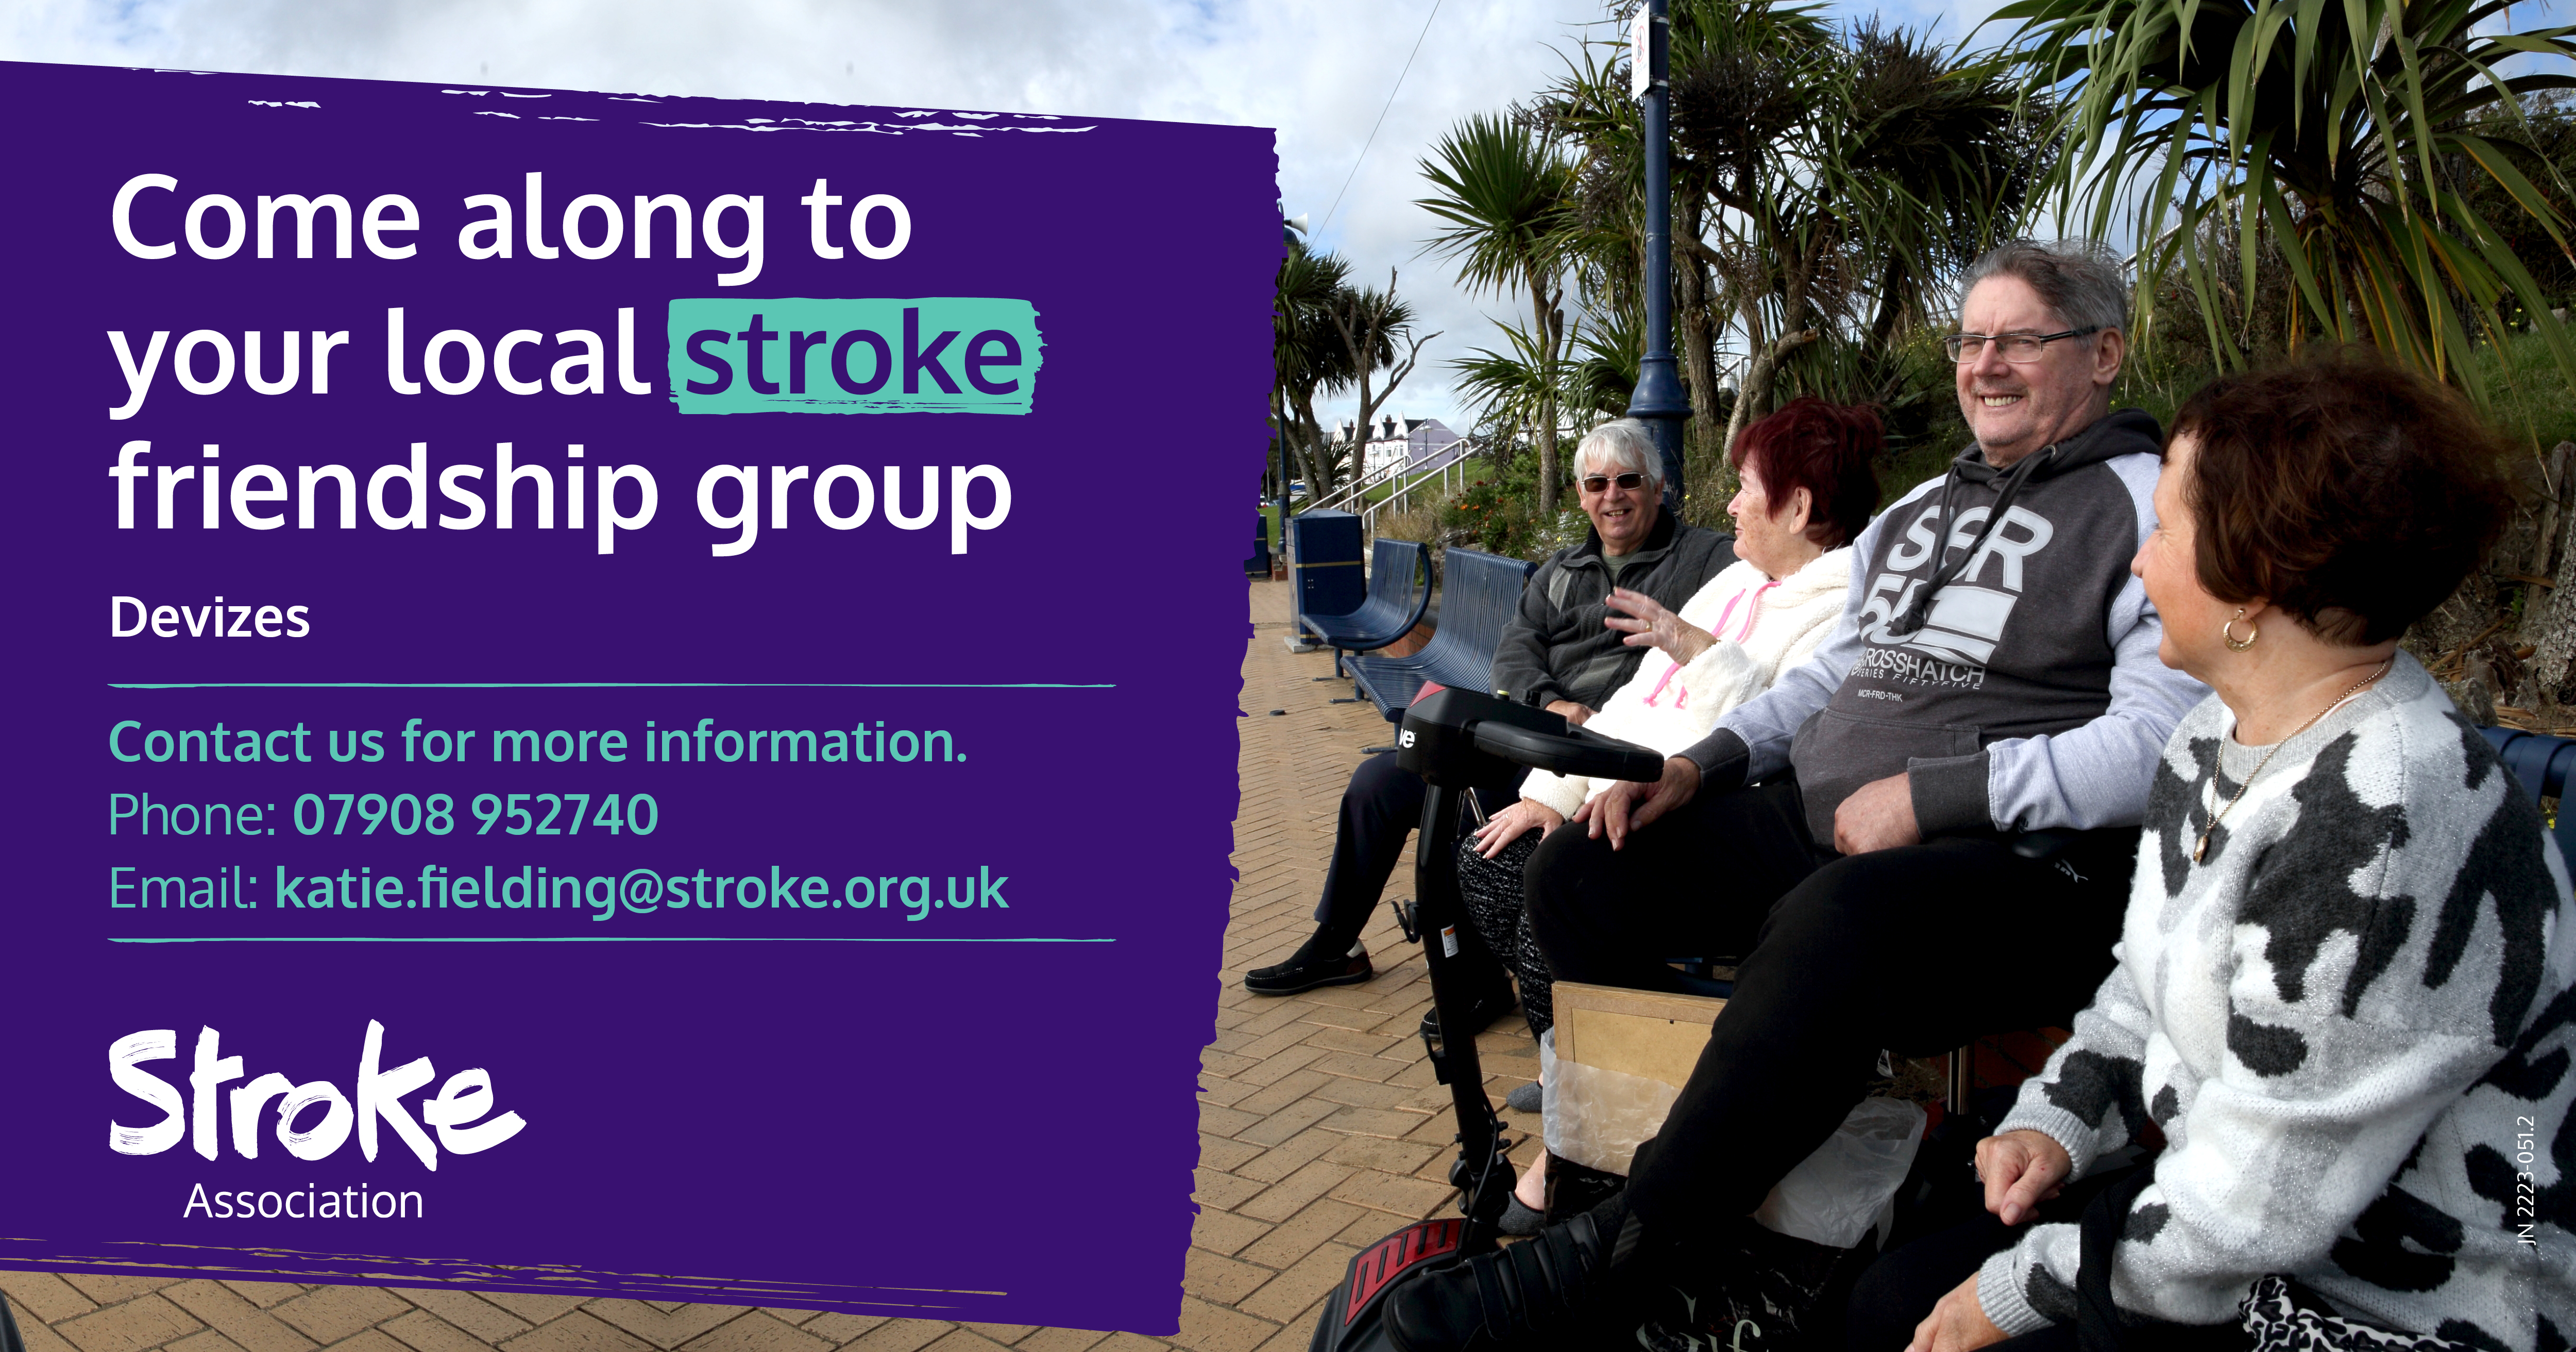 Poster detailing new friendship group for stroke survivors